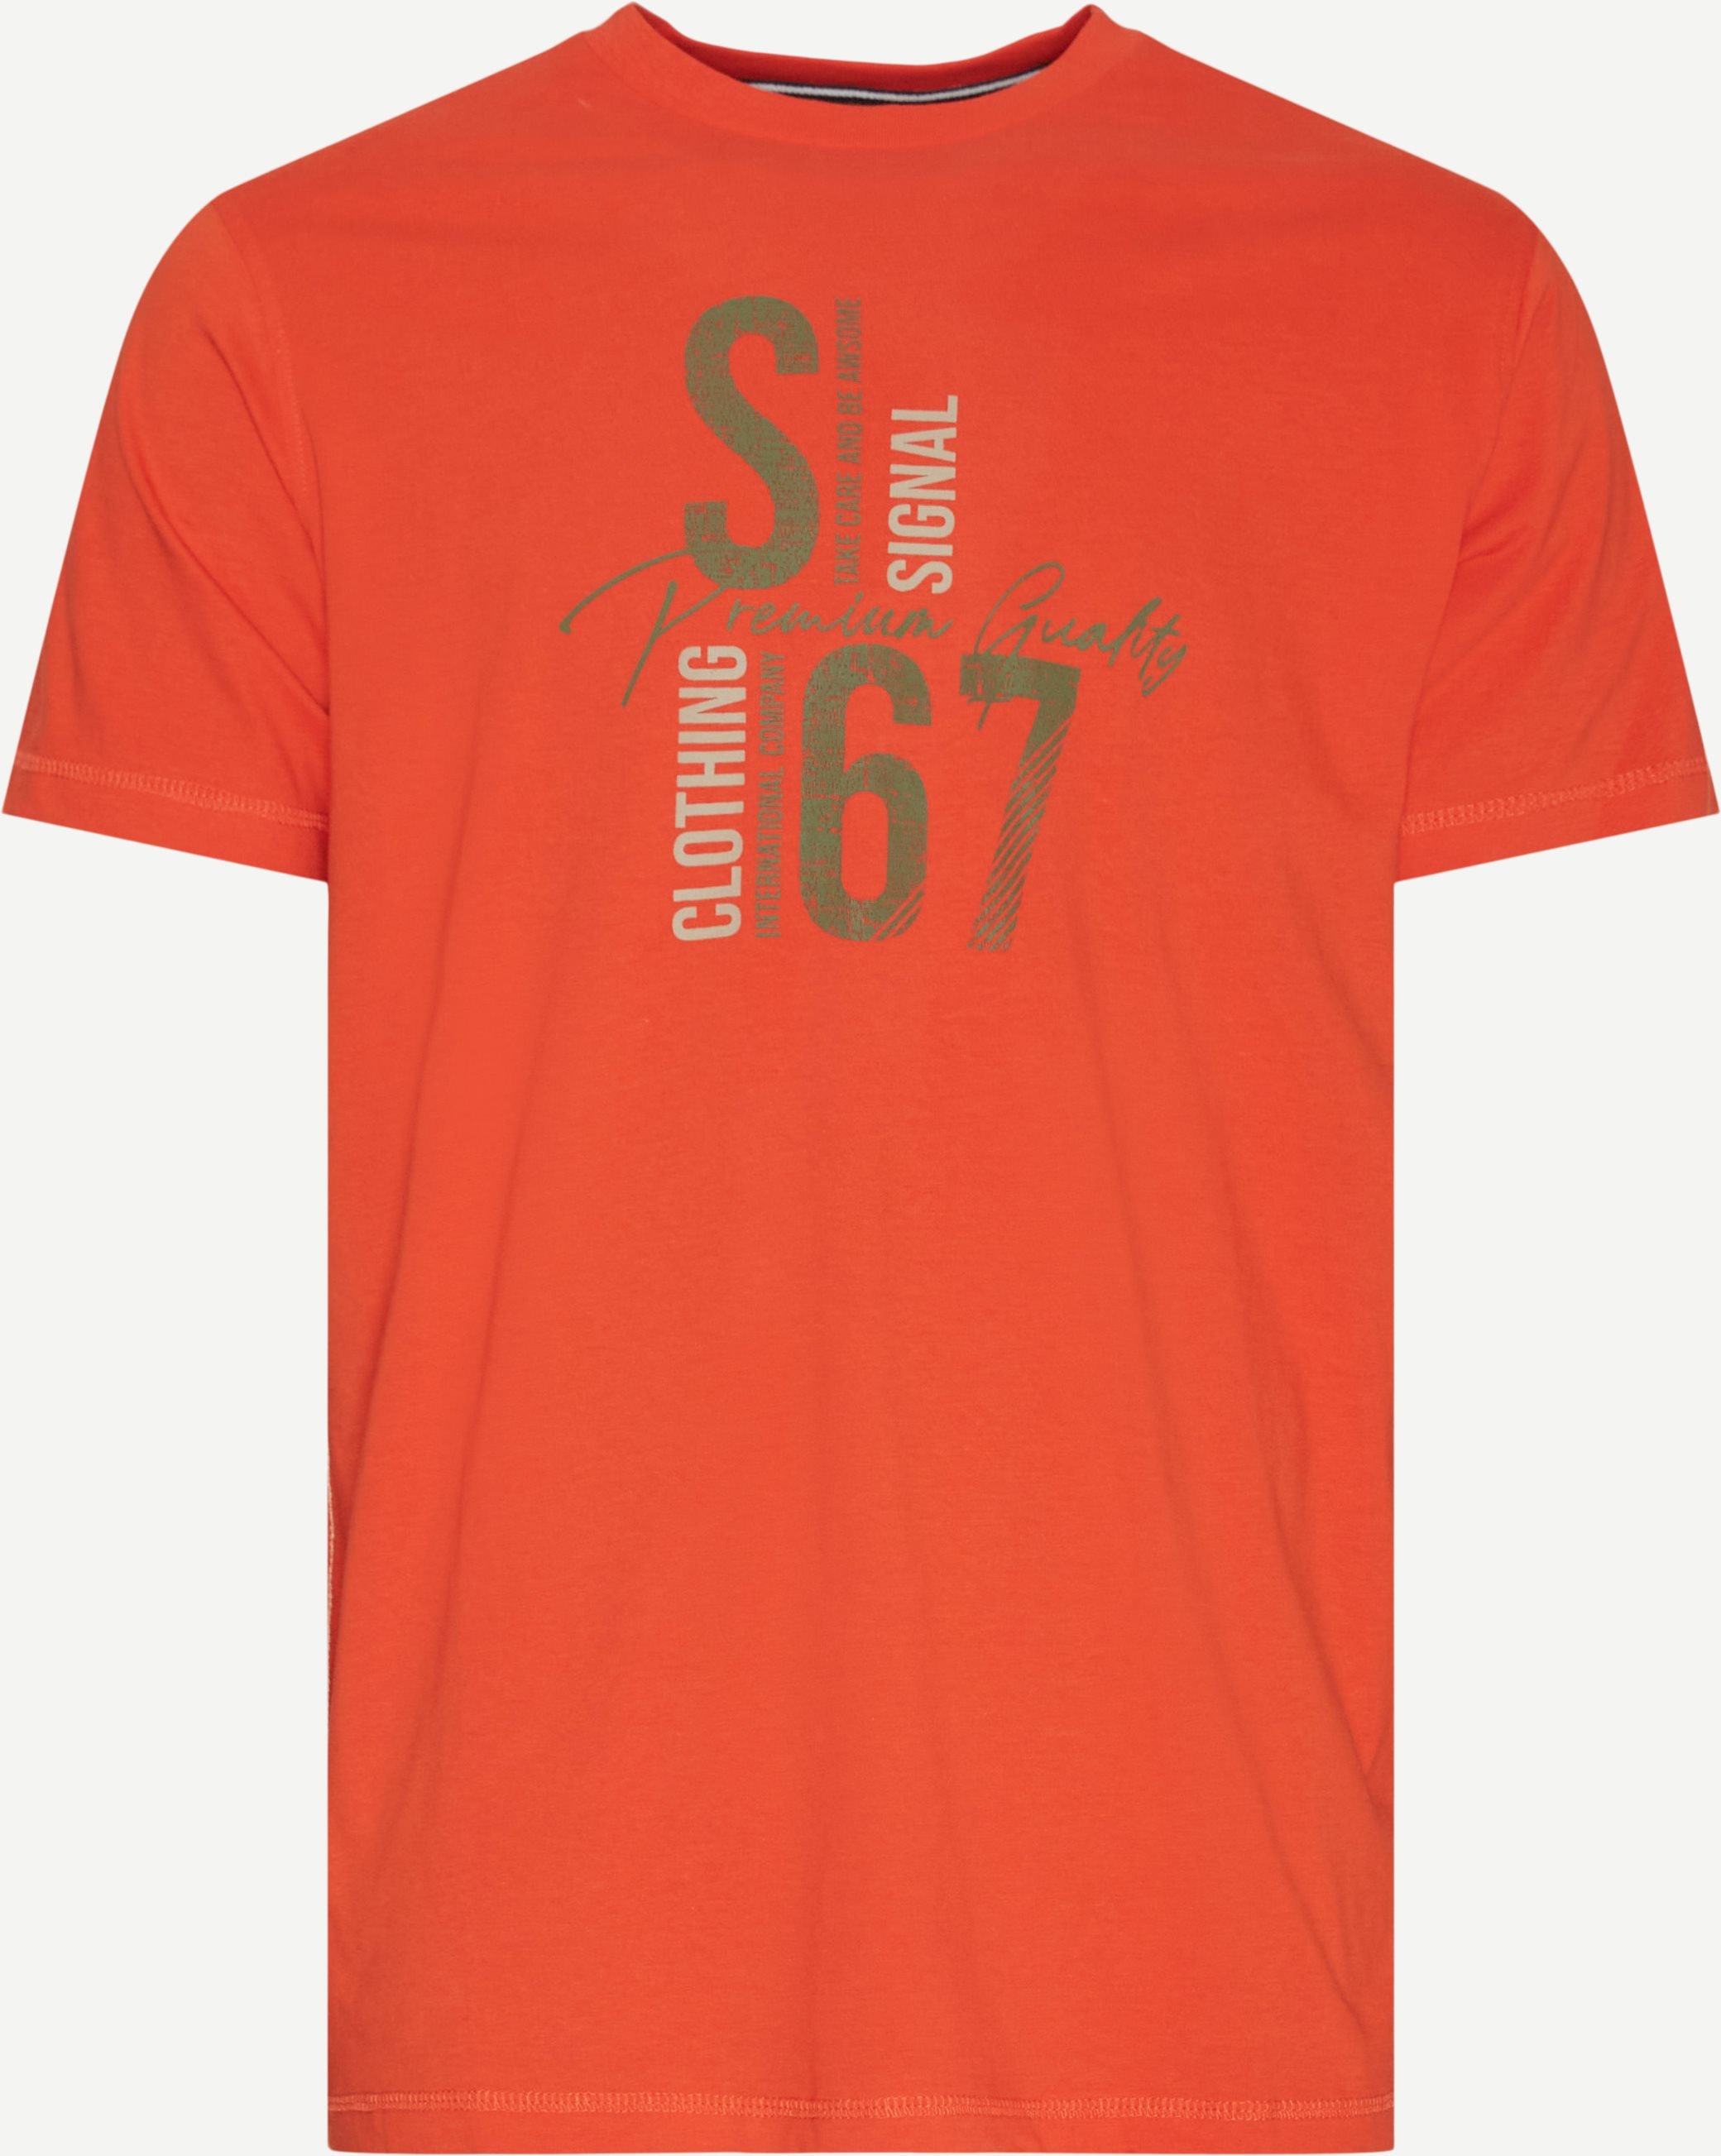 Oliver Logo Tee - T-shirts - Regular fit - Orange